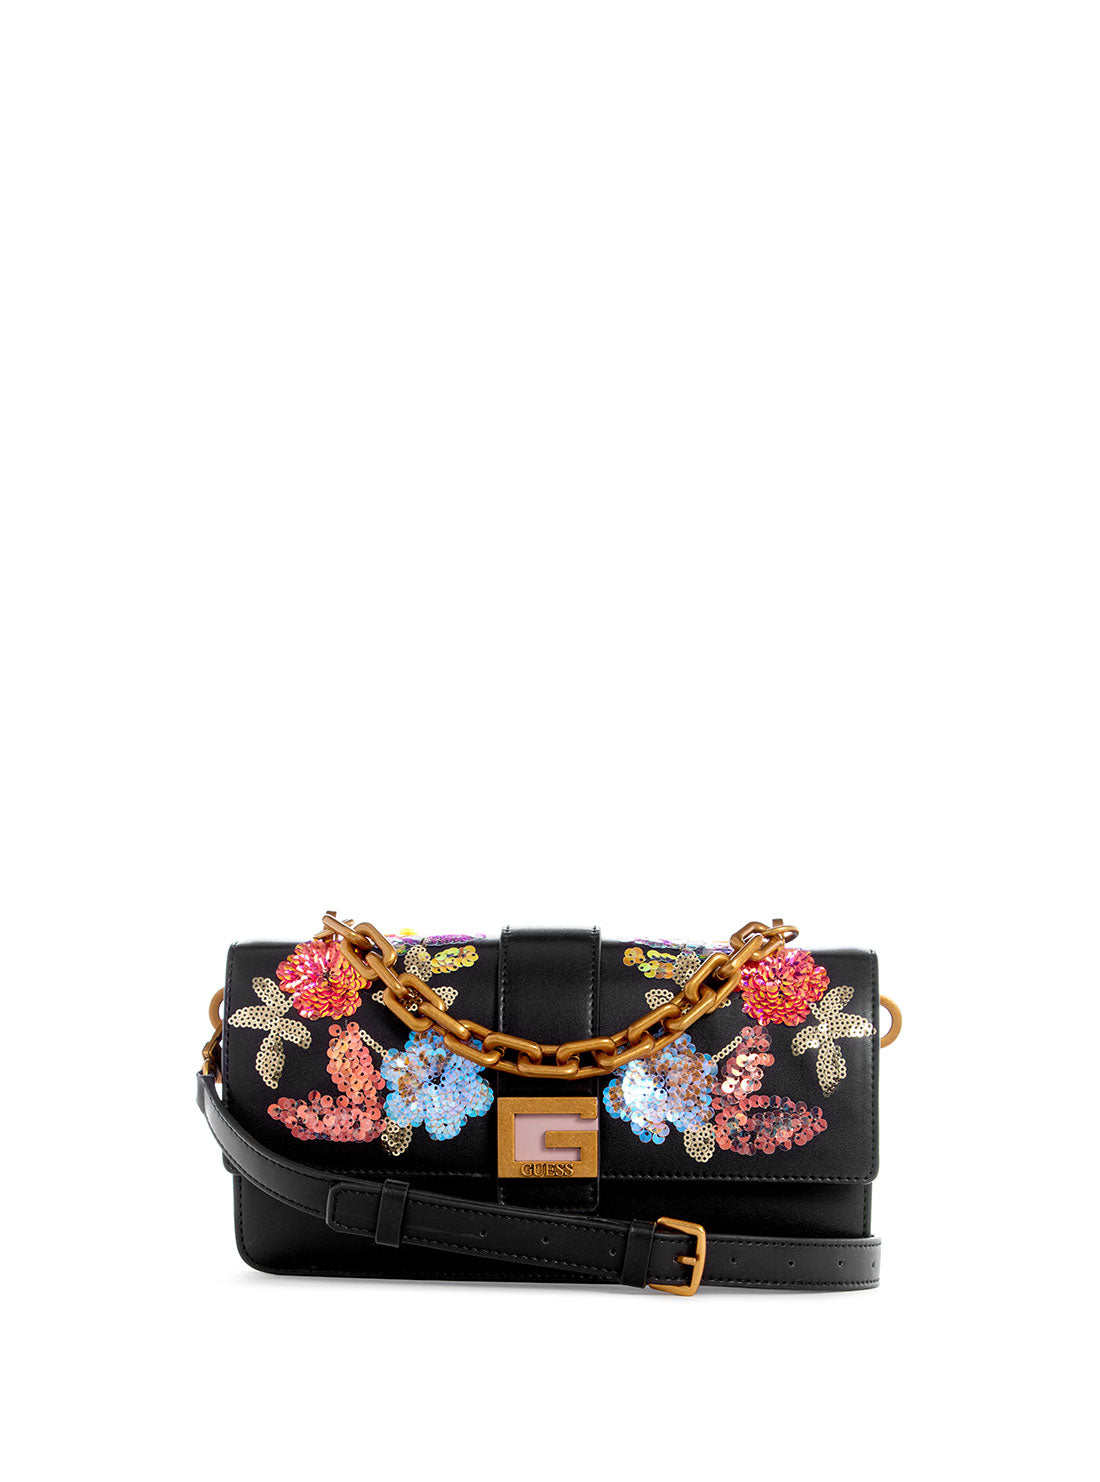 GUESS Women's Black Floral Morada Crossbody Bag FB868221 Front View